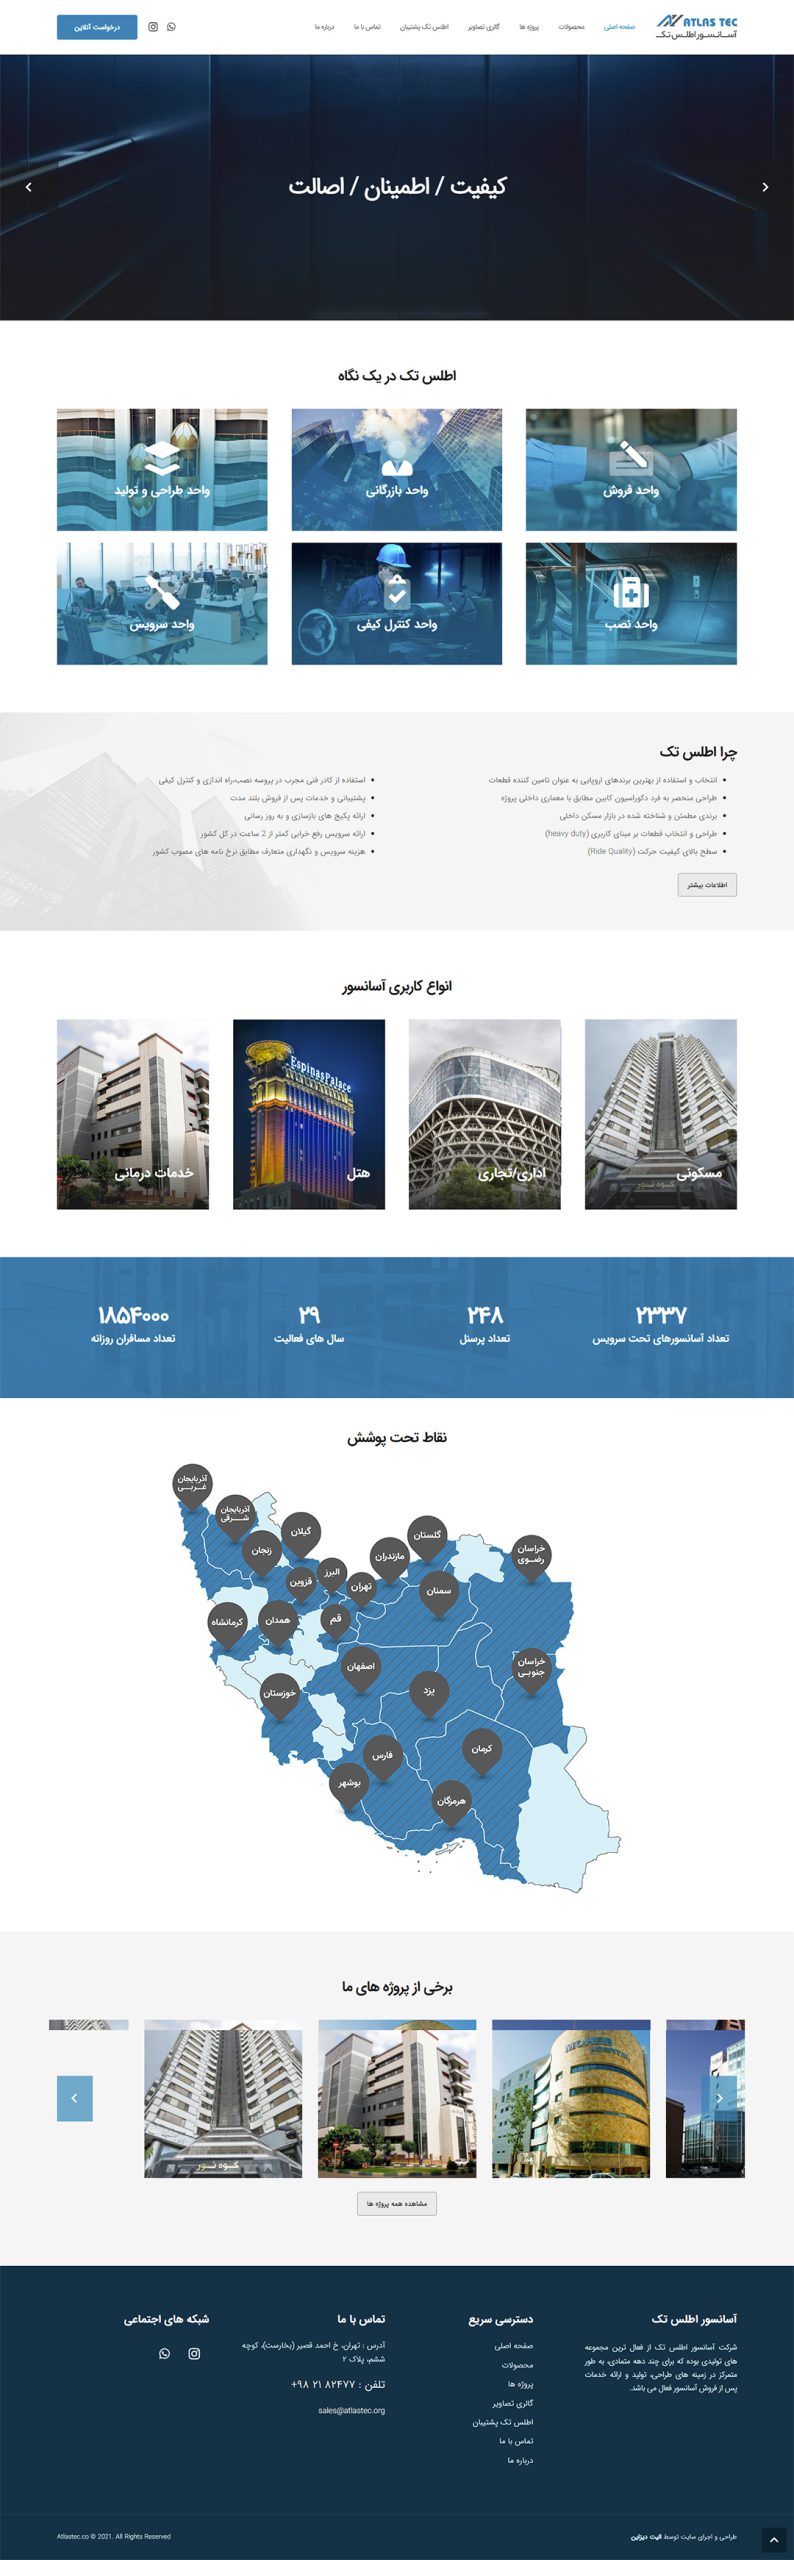 طراحی سایت شرکت اطلس تک